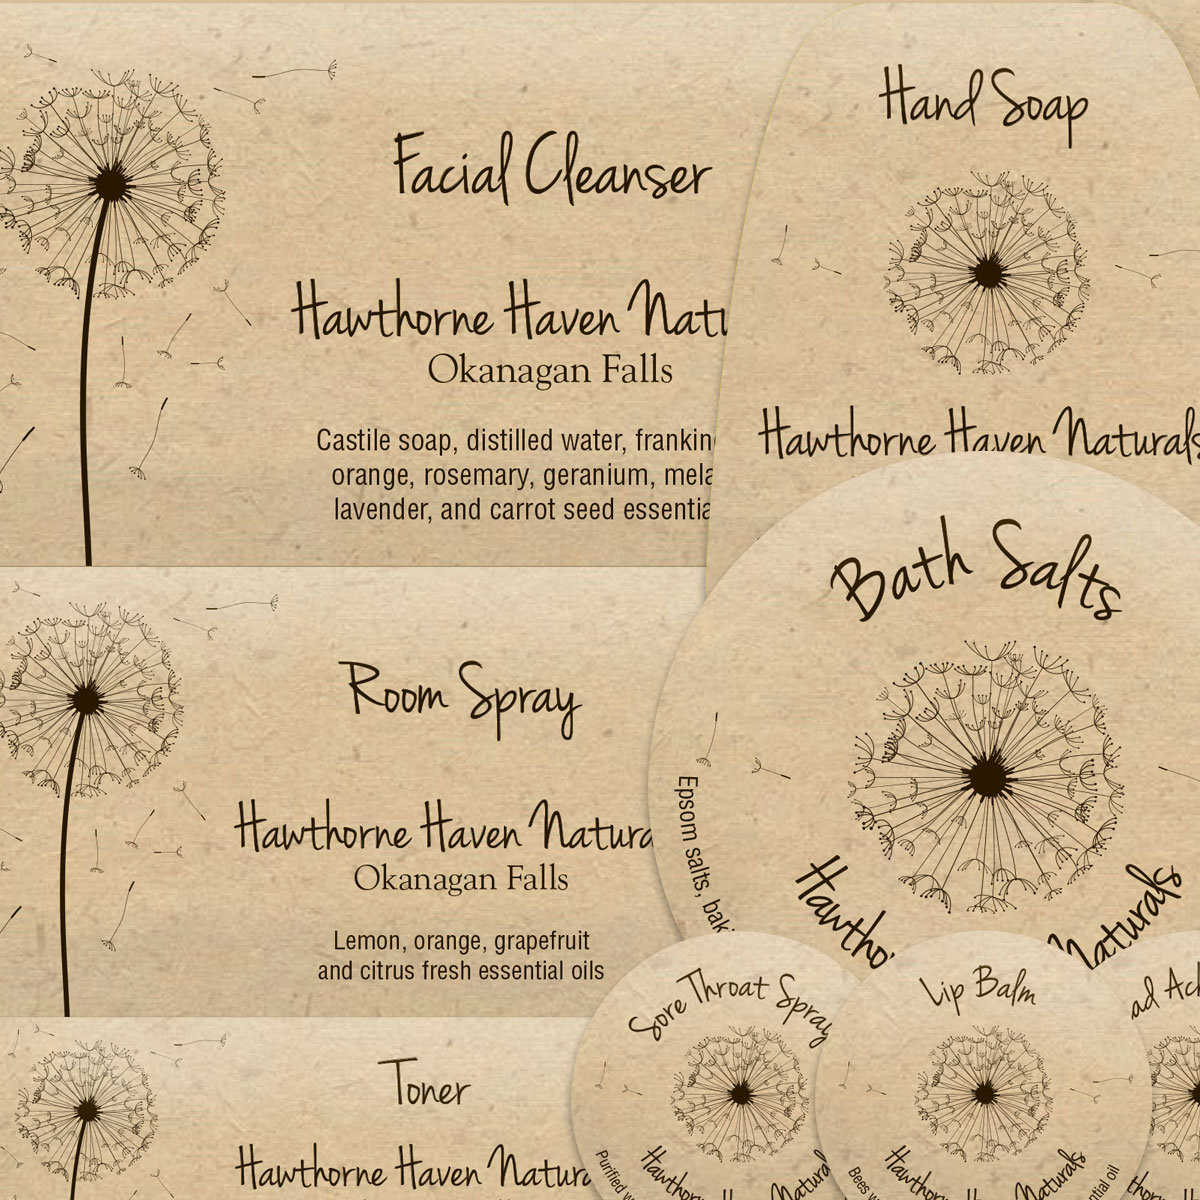 Hawthorne Haven Naturals labels